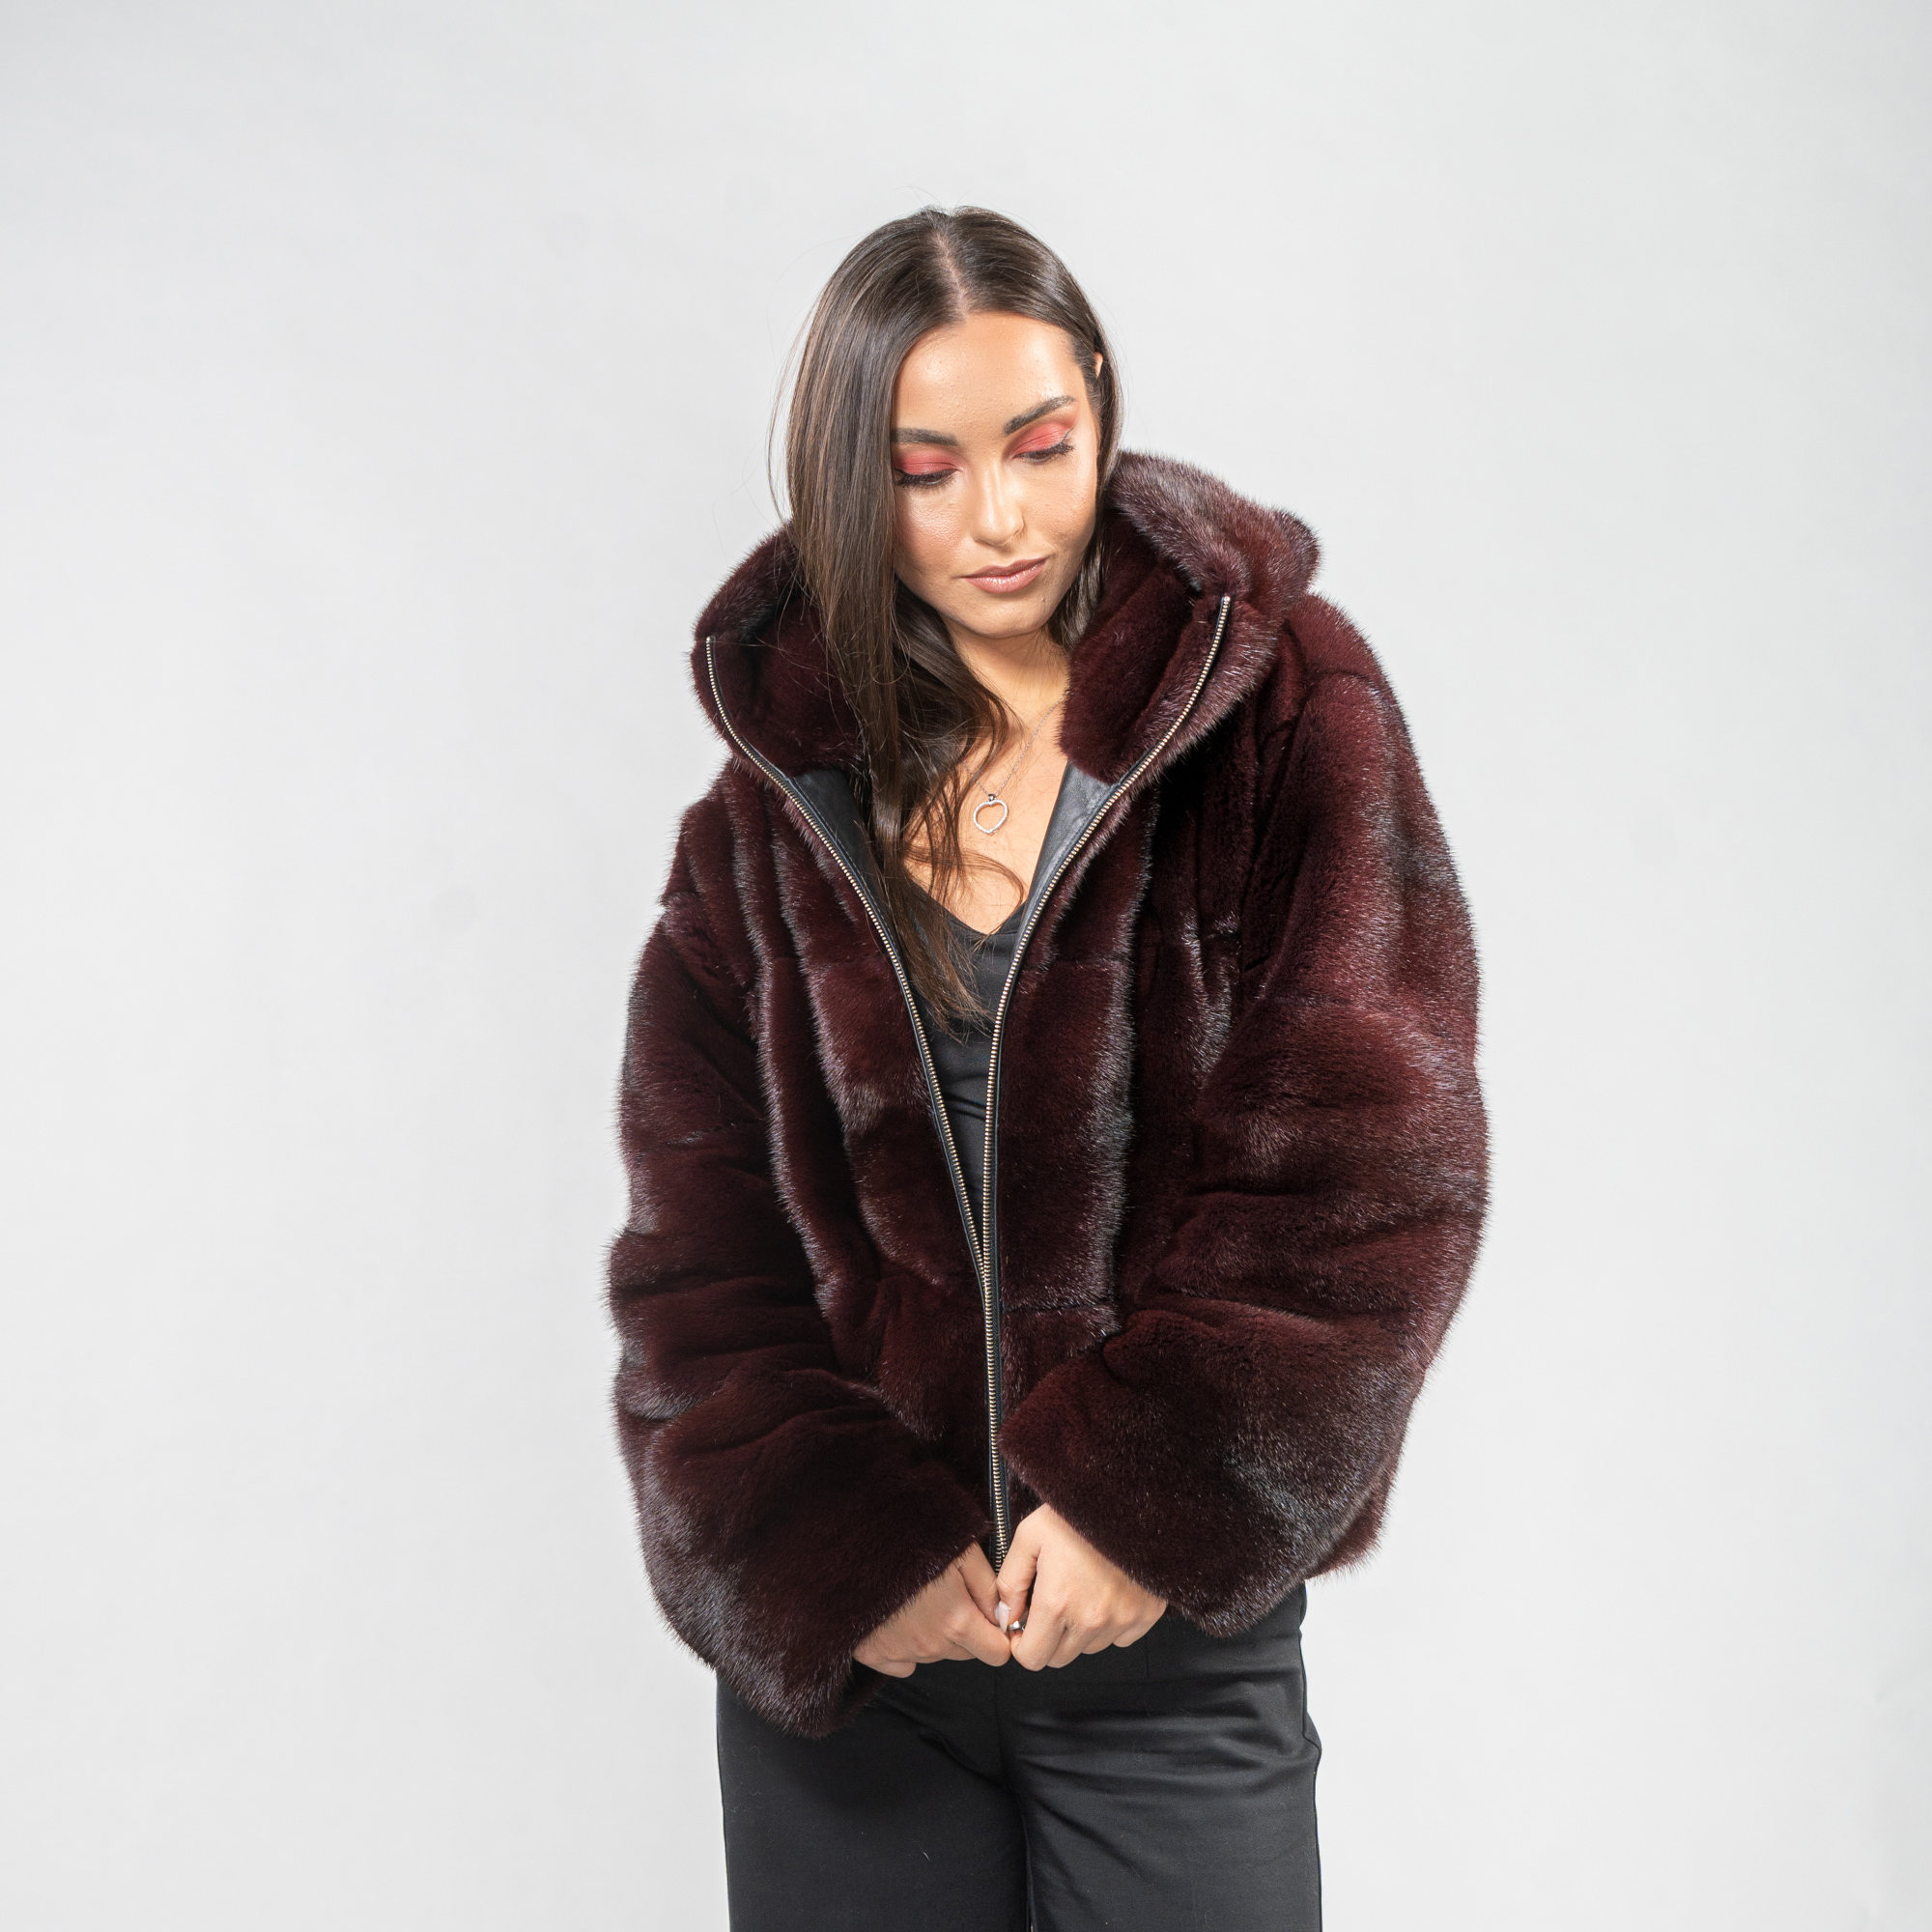 Mink fur jacket with a hood in burgundy color